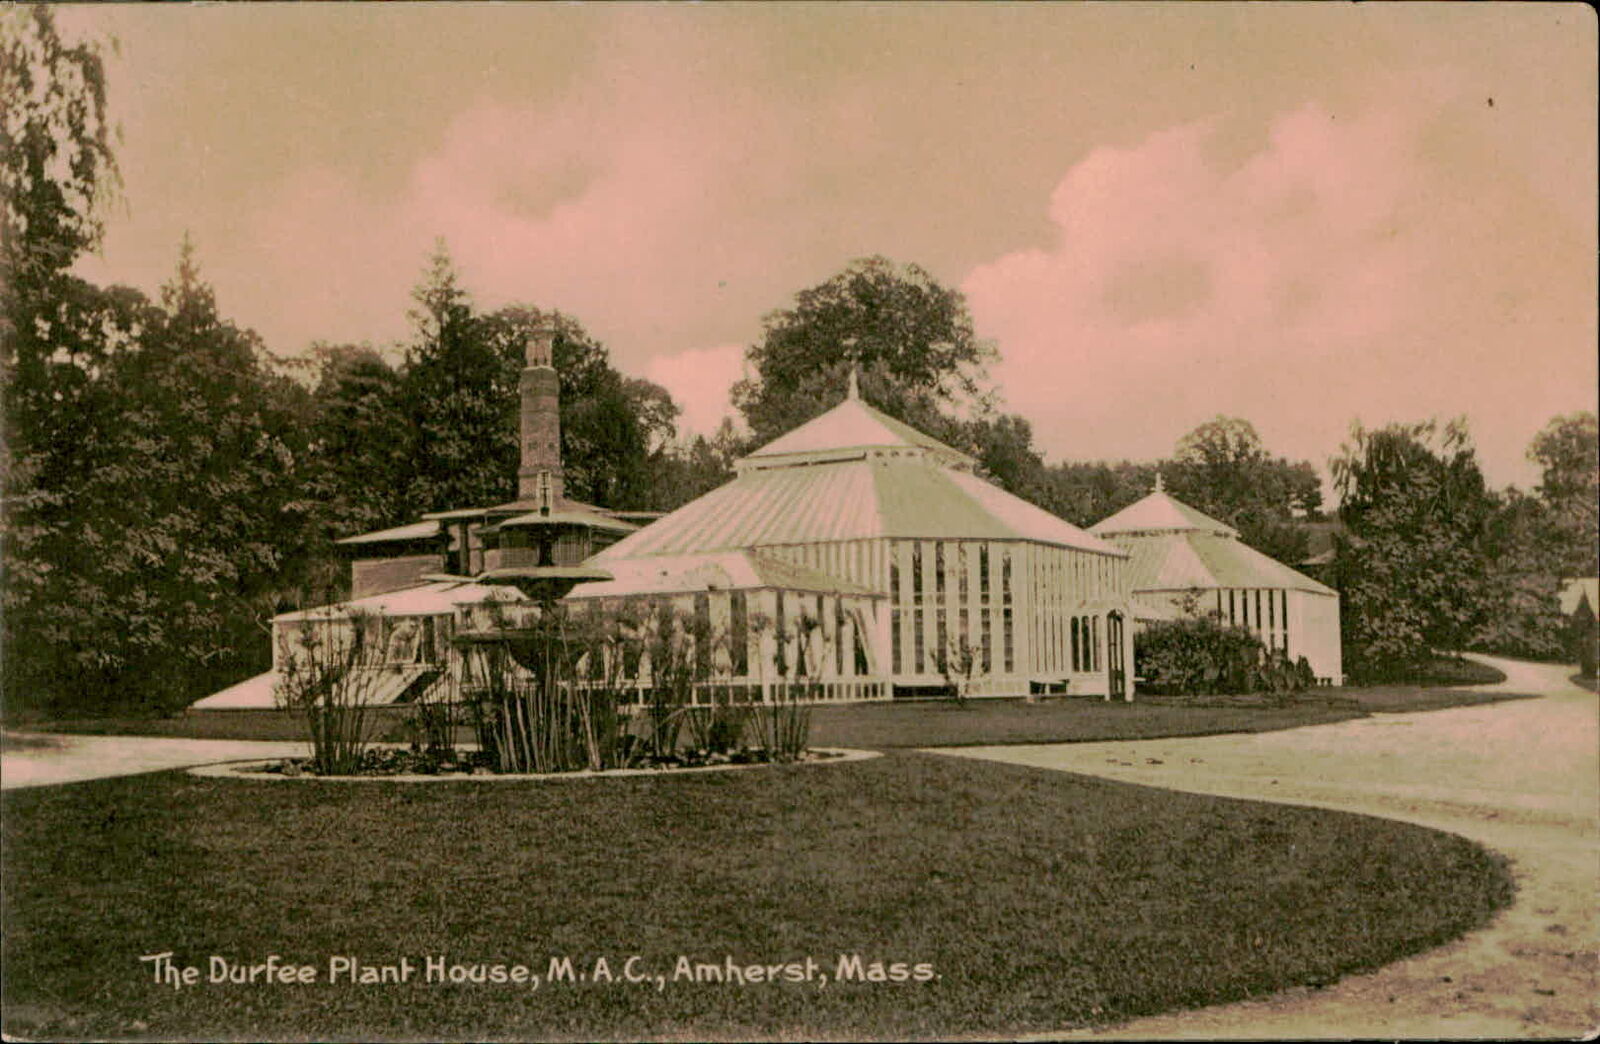 Postcard: The Durfee Plant House, M.A.C., Amherst, Mass.